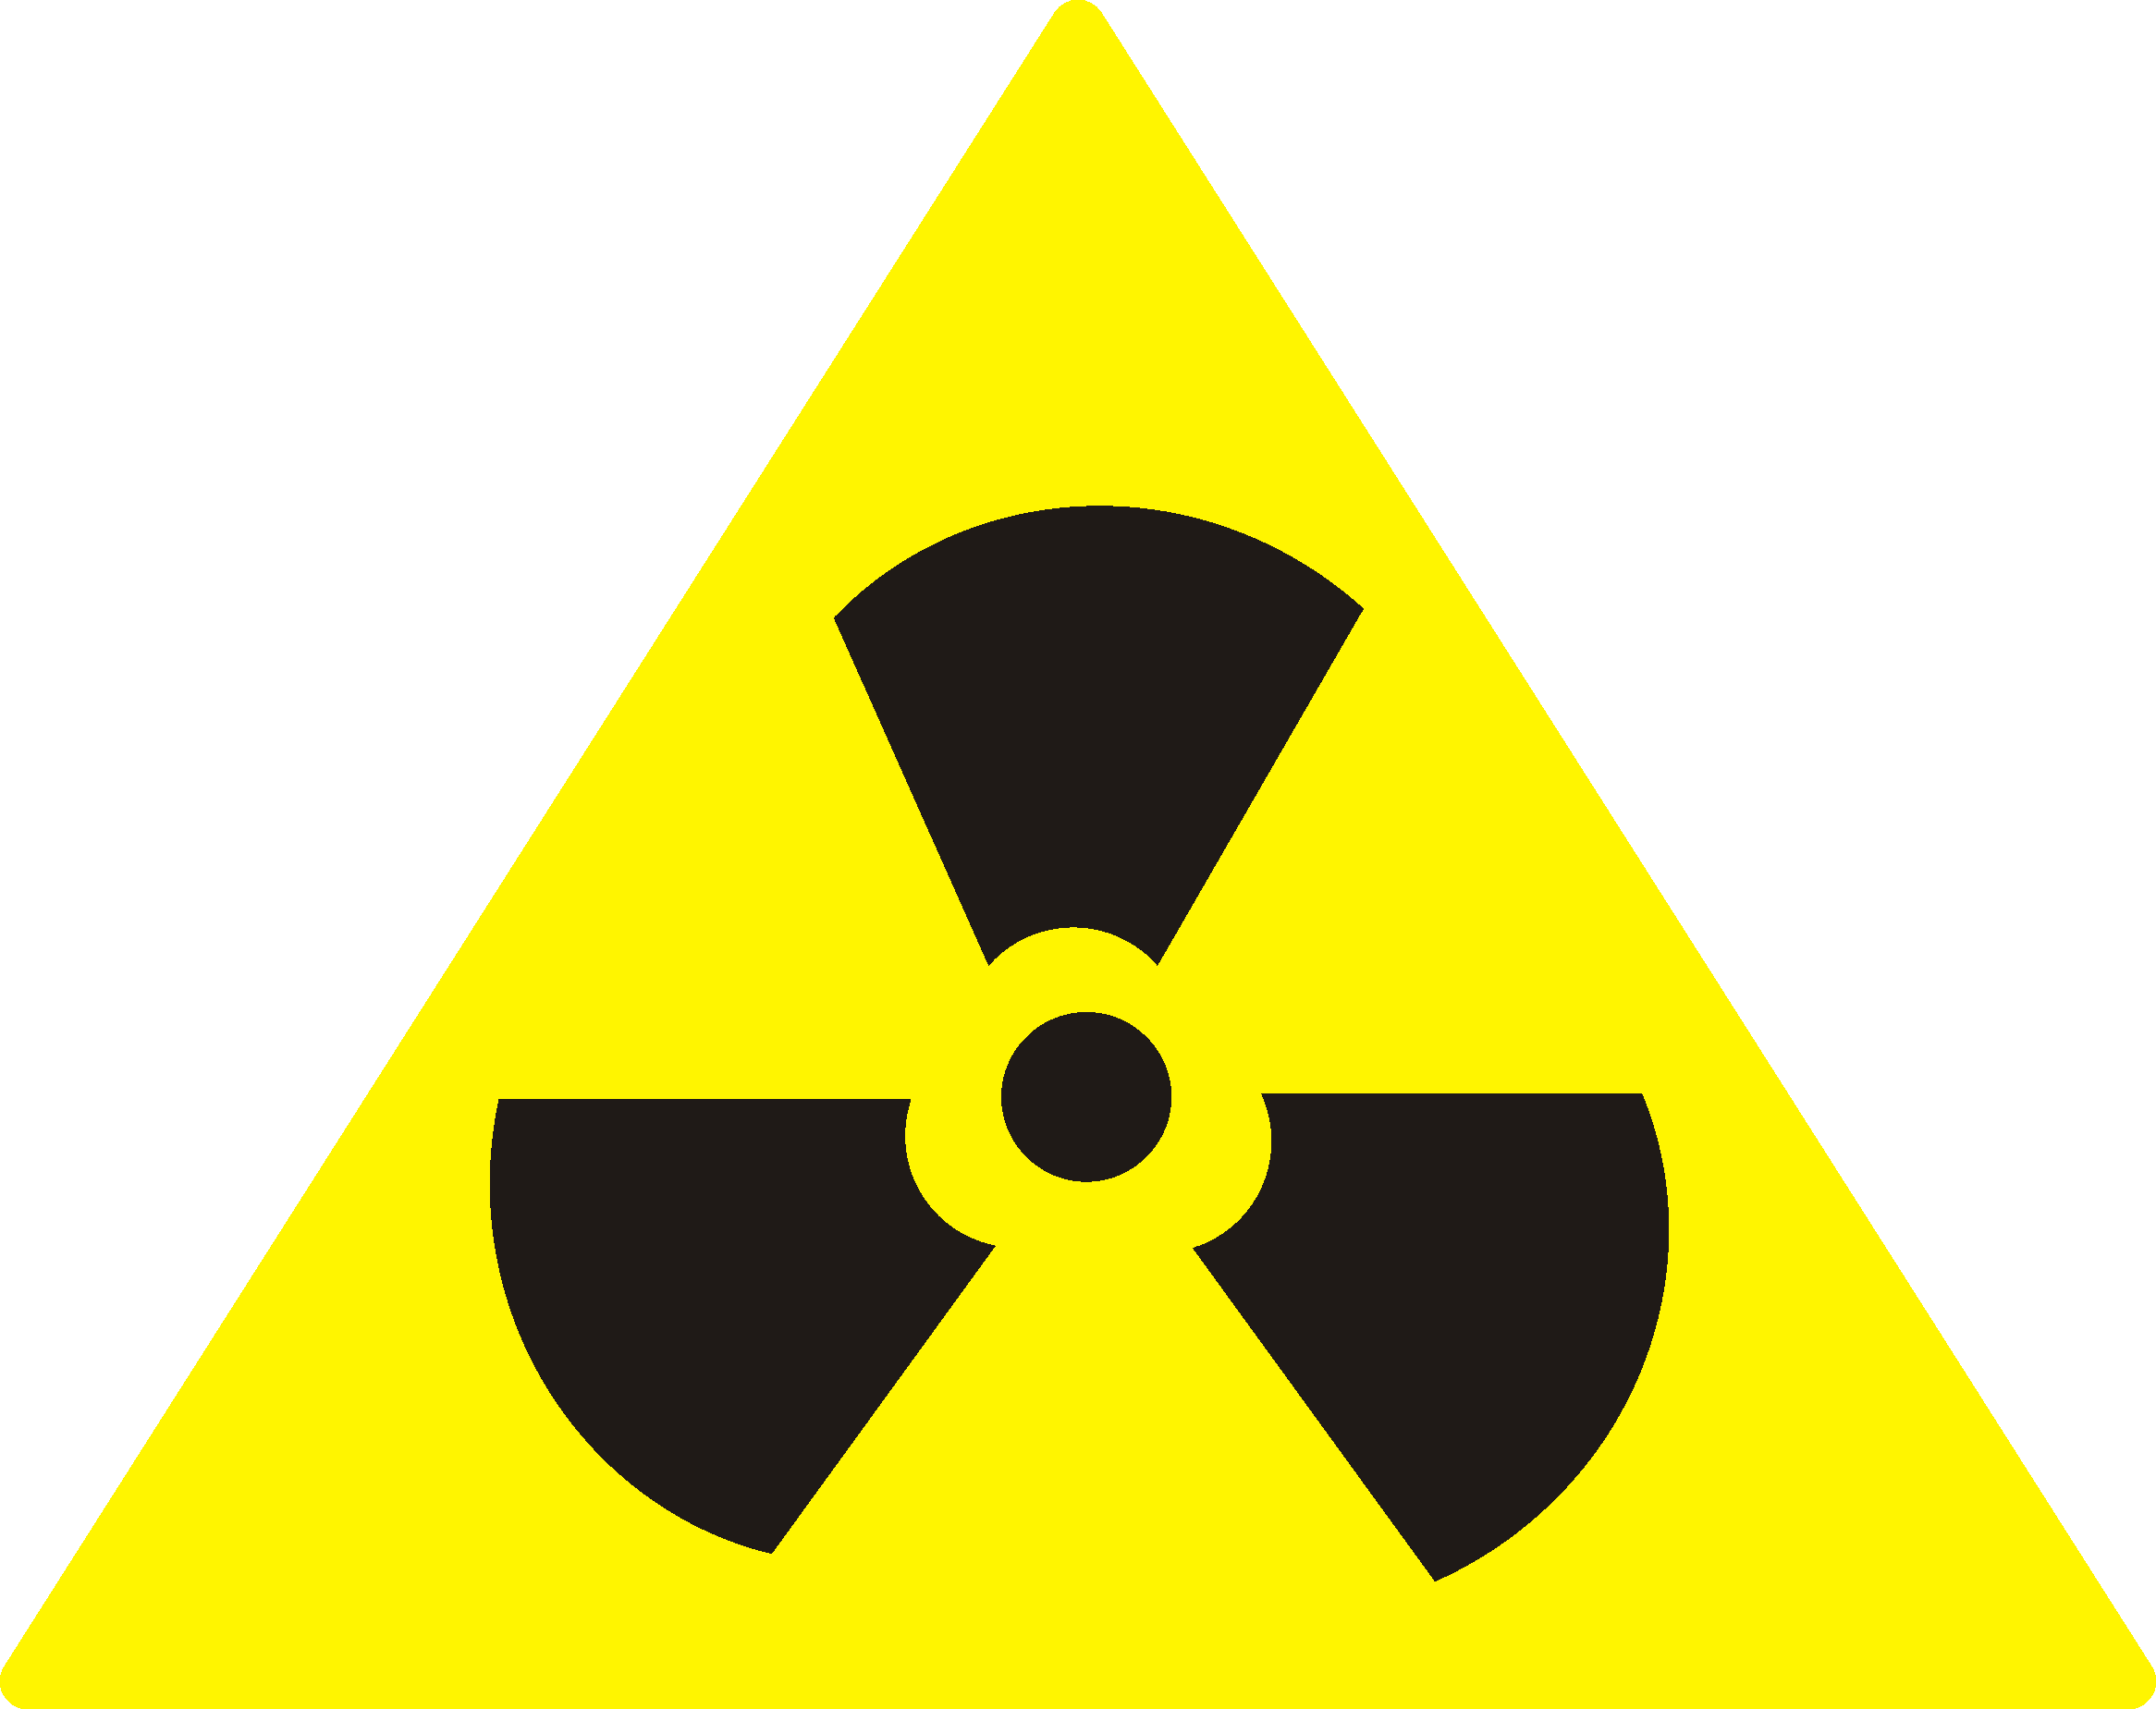 Symbole nucléaire